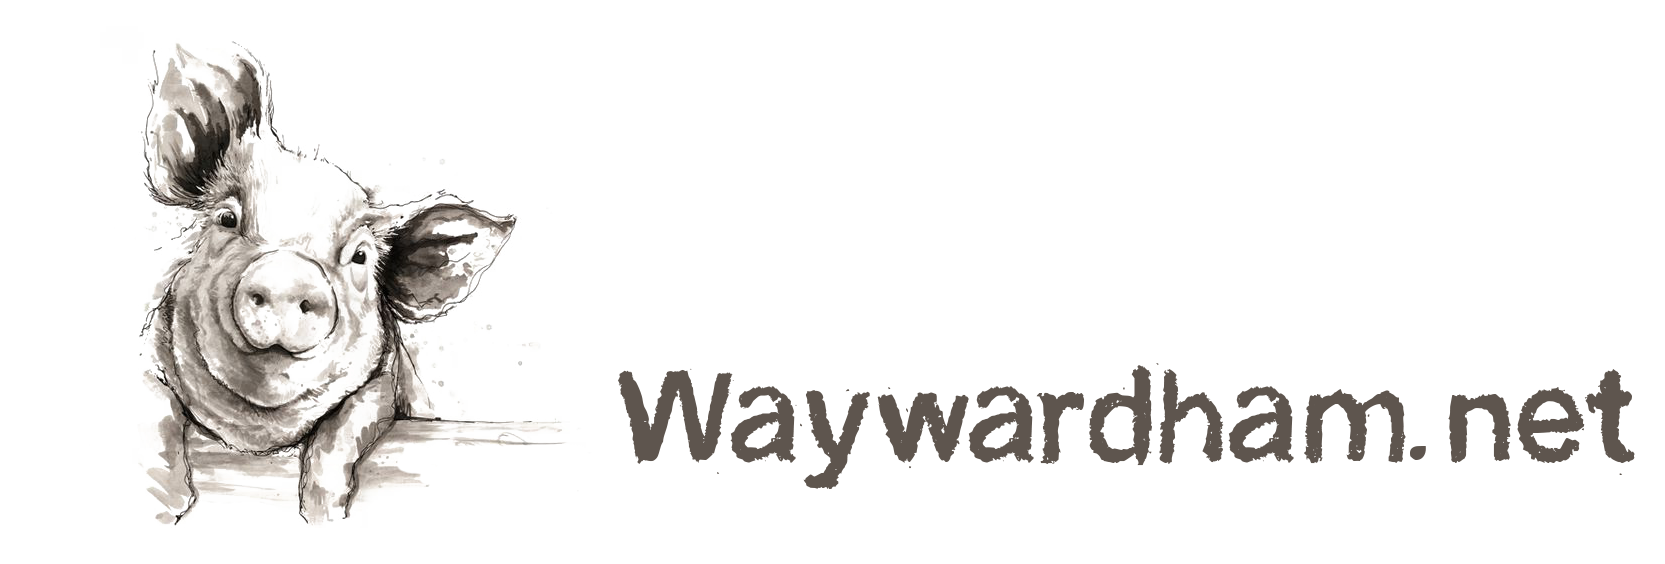 Waywardham.net